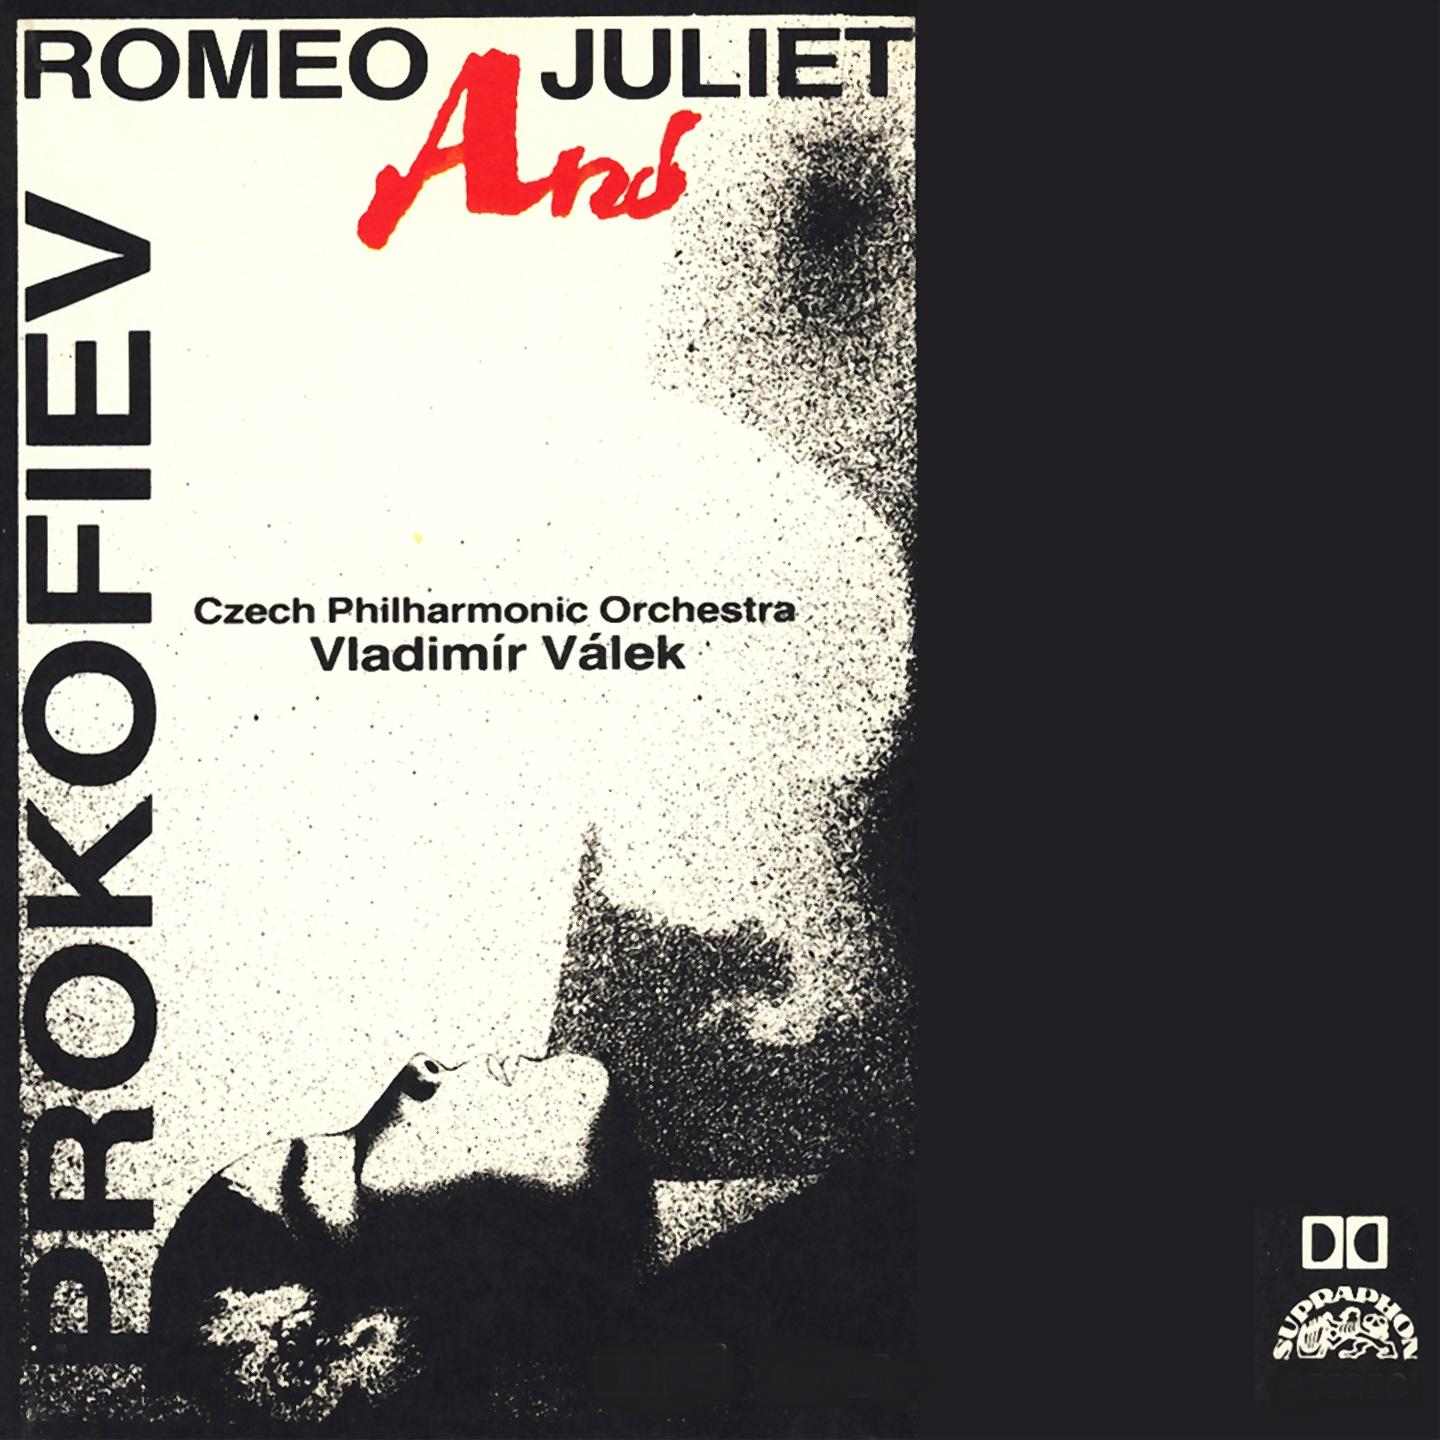 Romeo and Juliet, Suite No. 1, Op. 64bis: VI. Romeo and Juliet